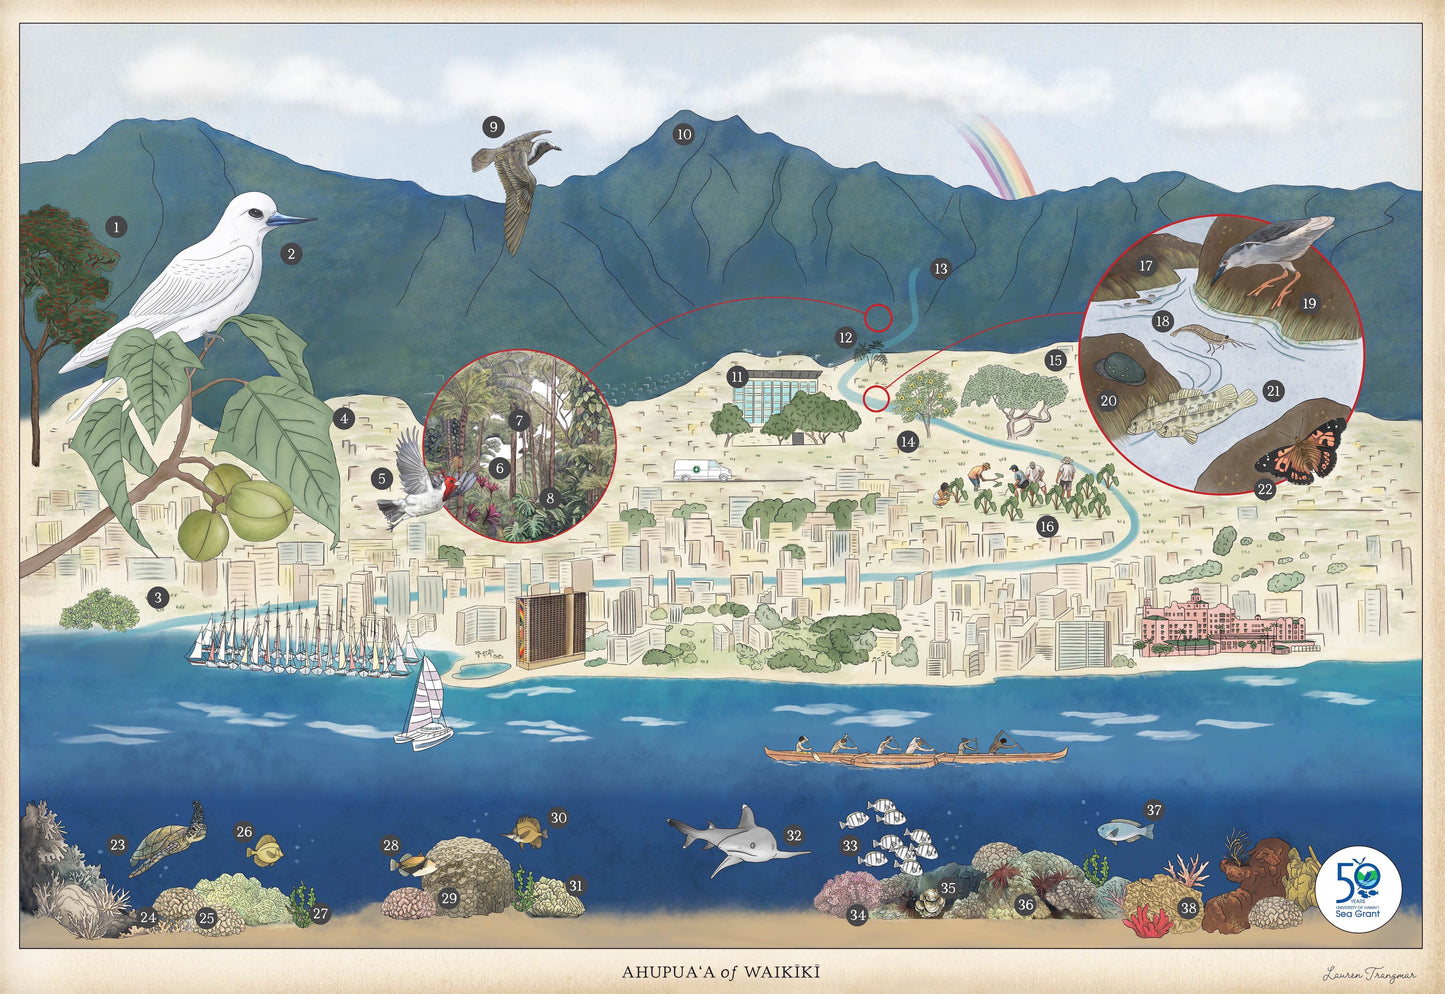 Ahupuaʻa of Waikīkī by Lauren Trangmar in partnership with Hawaiʻi Sea Grant